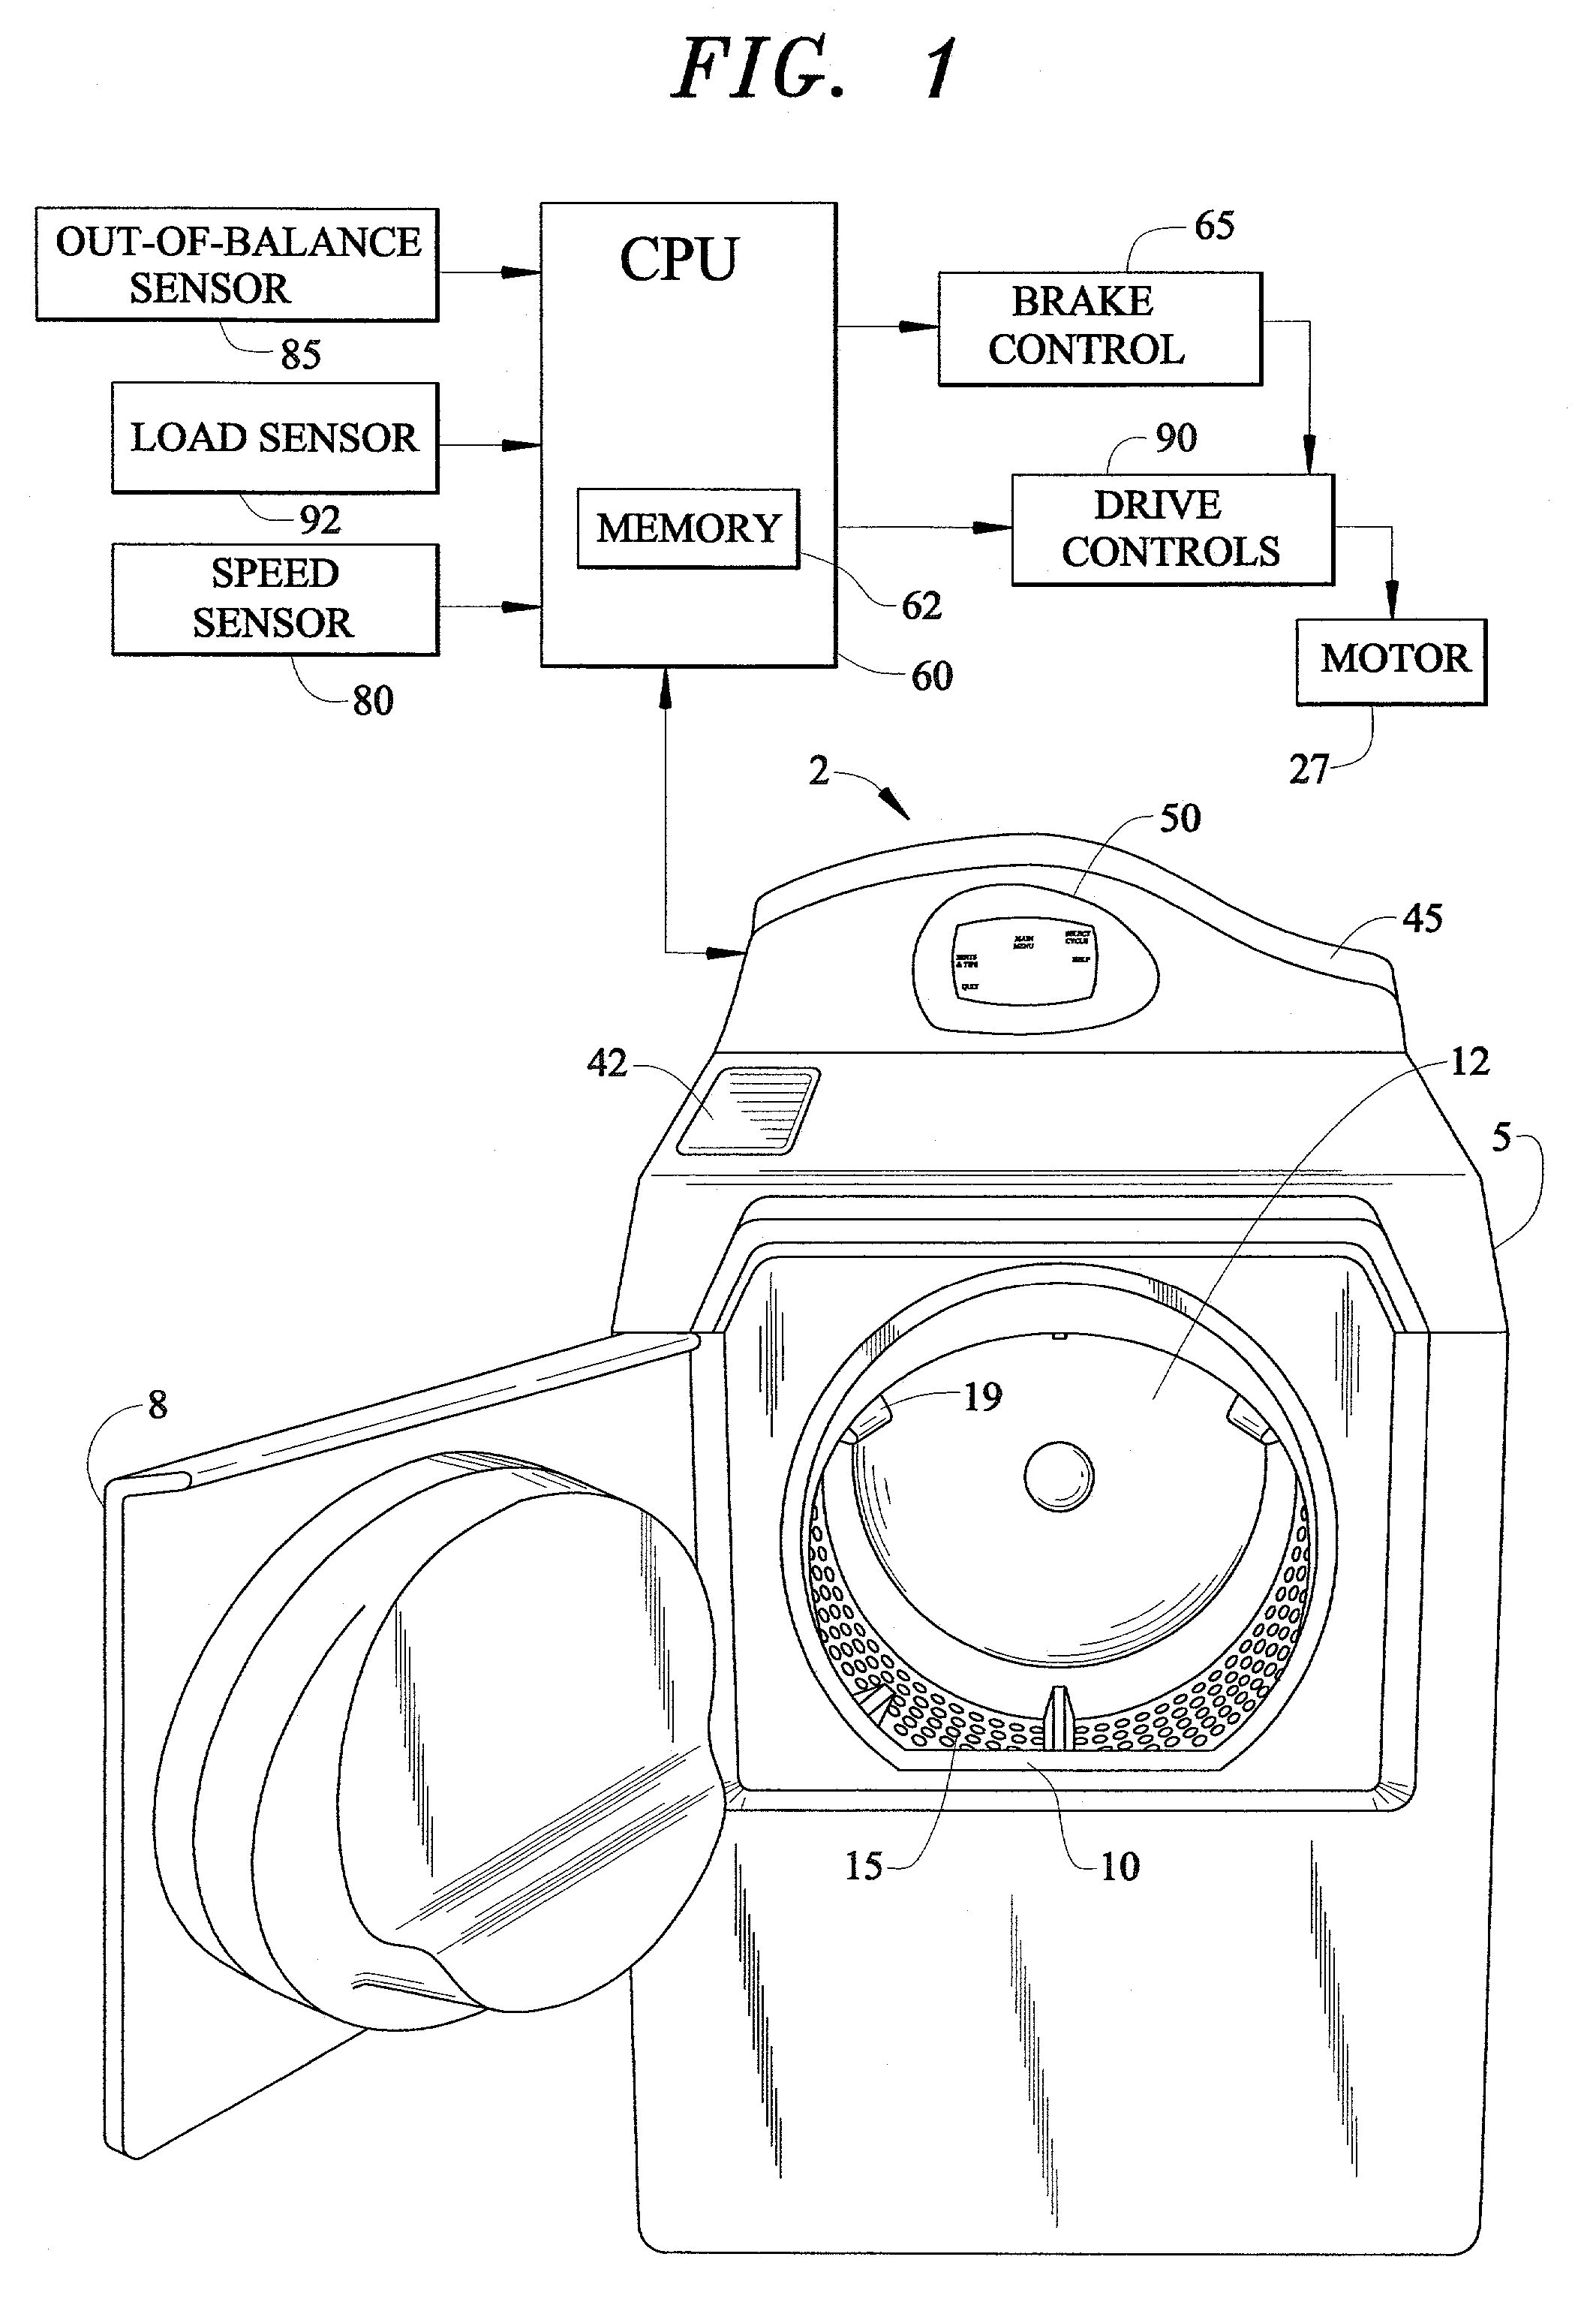 Braking control system for a washing machine